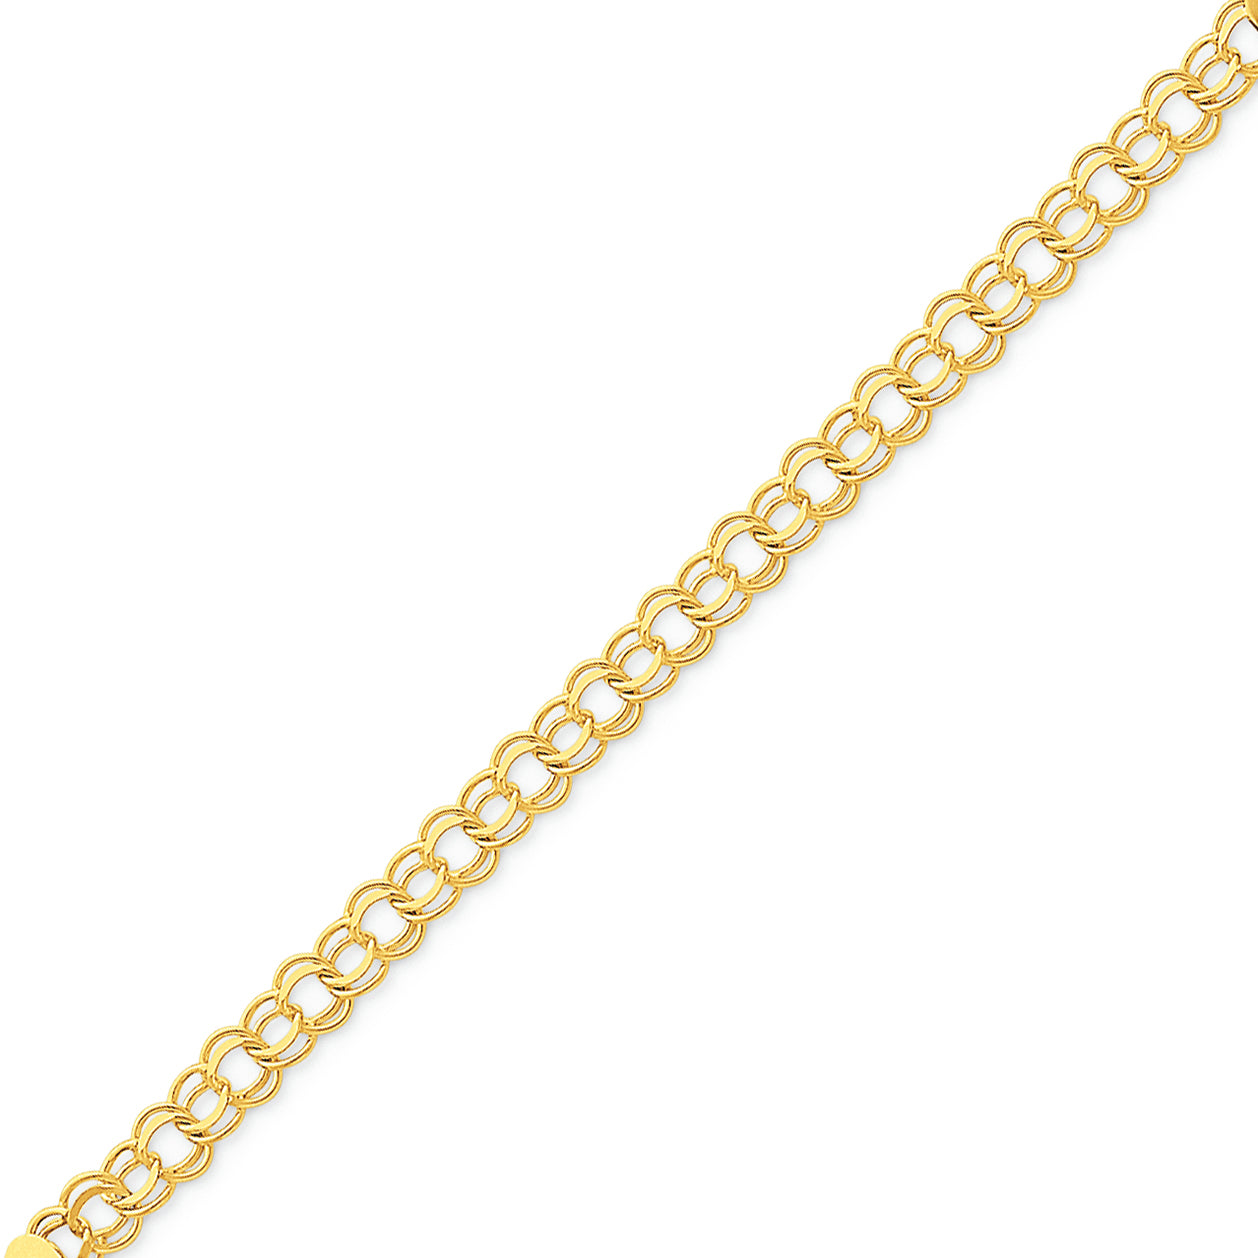 14K Gold Doubl Link Charm Bracelet 7 Inches